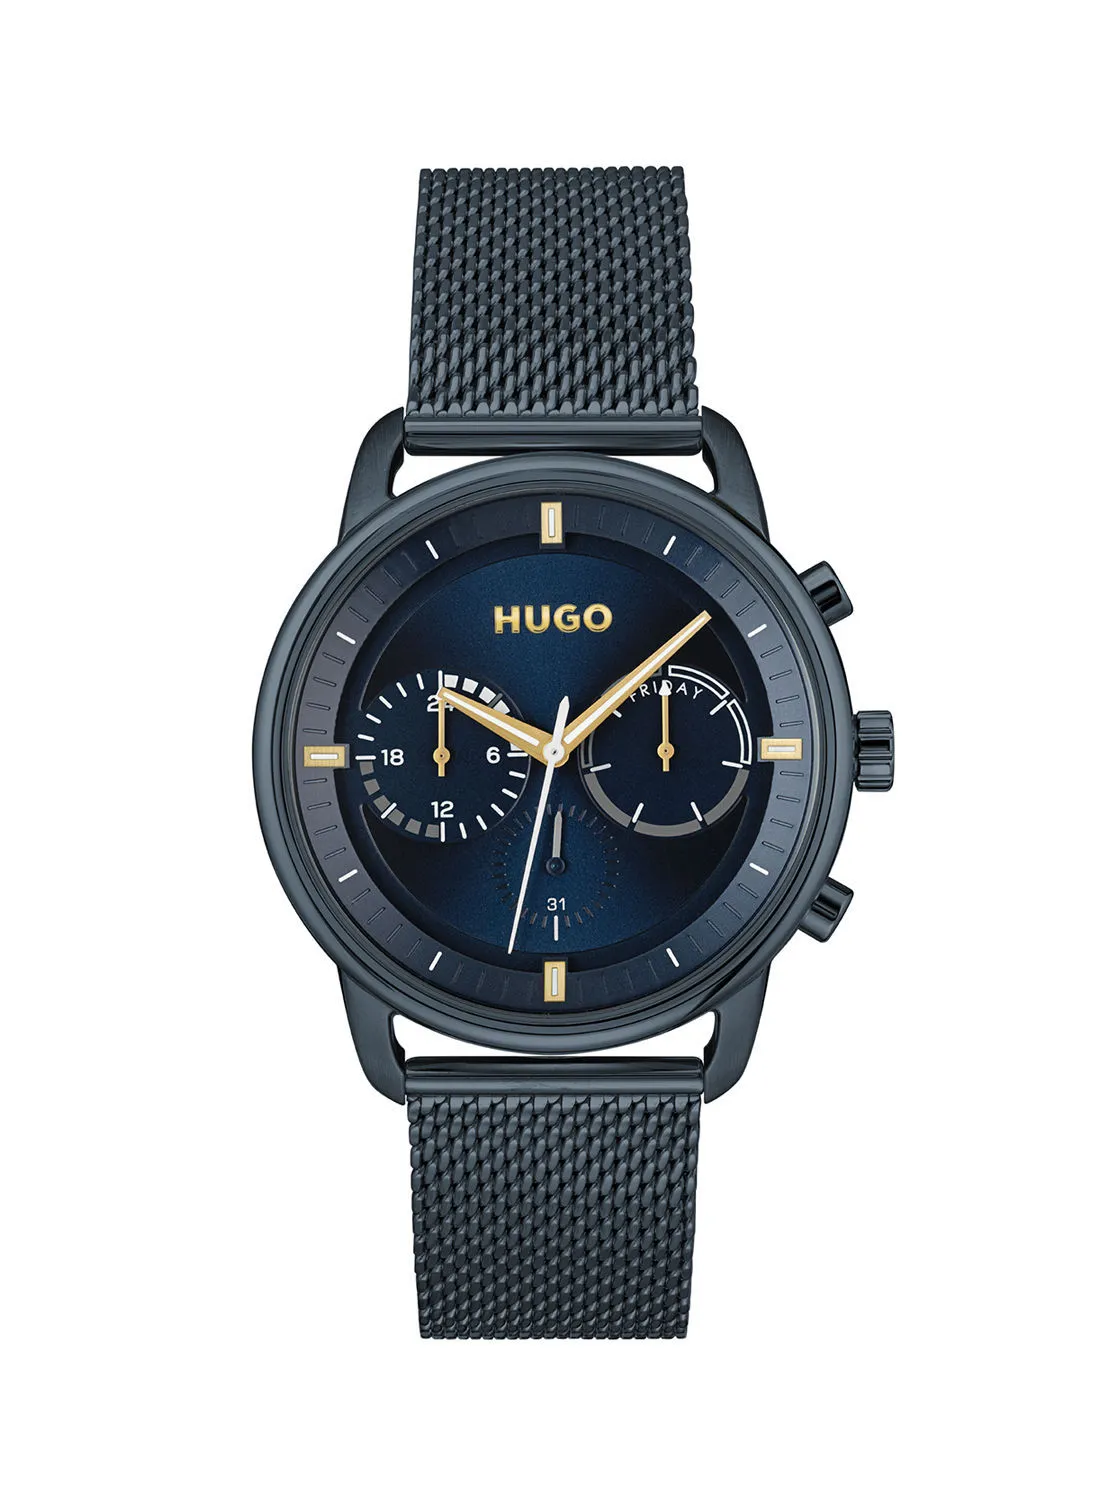 HUGO BOSS Men's Advise Blue Dial Watch - 1530237